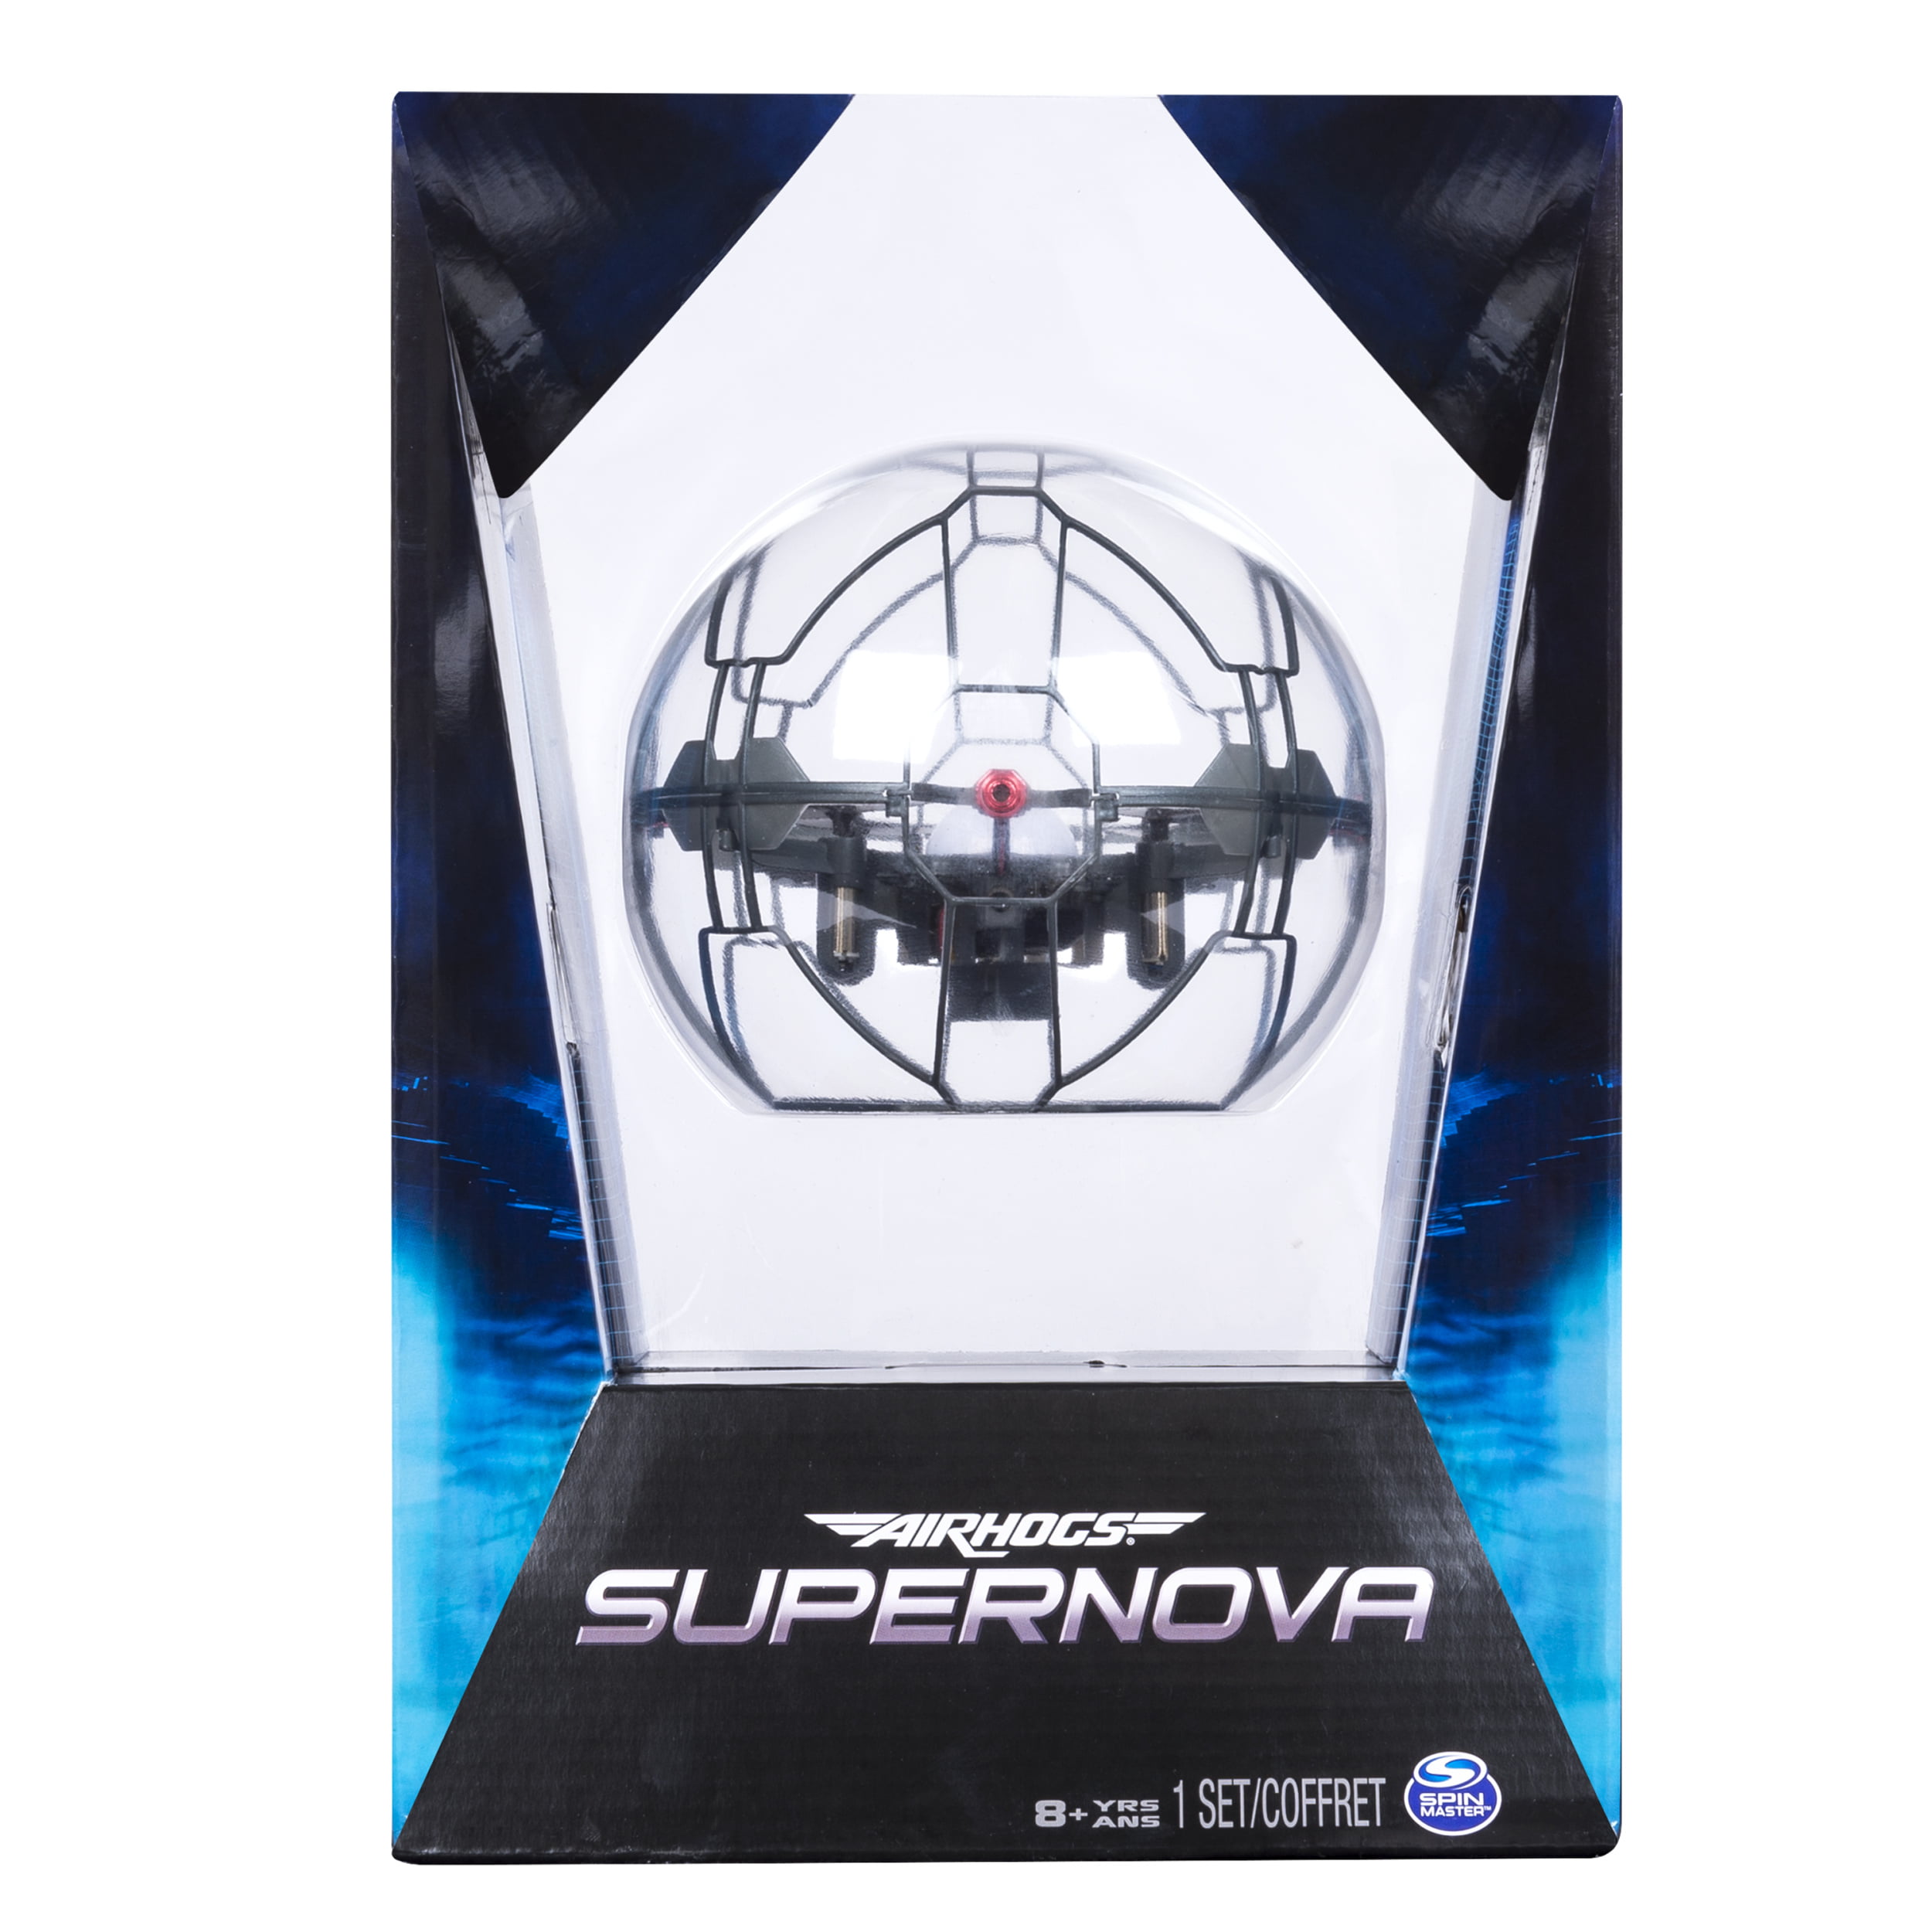 supernova drone walmart